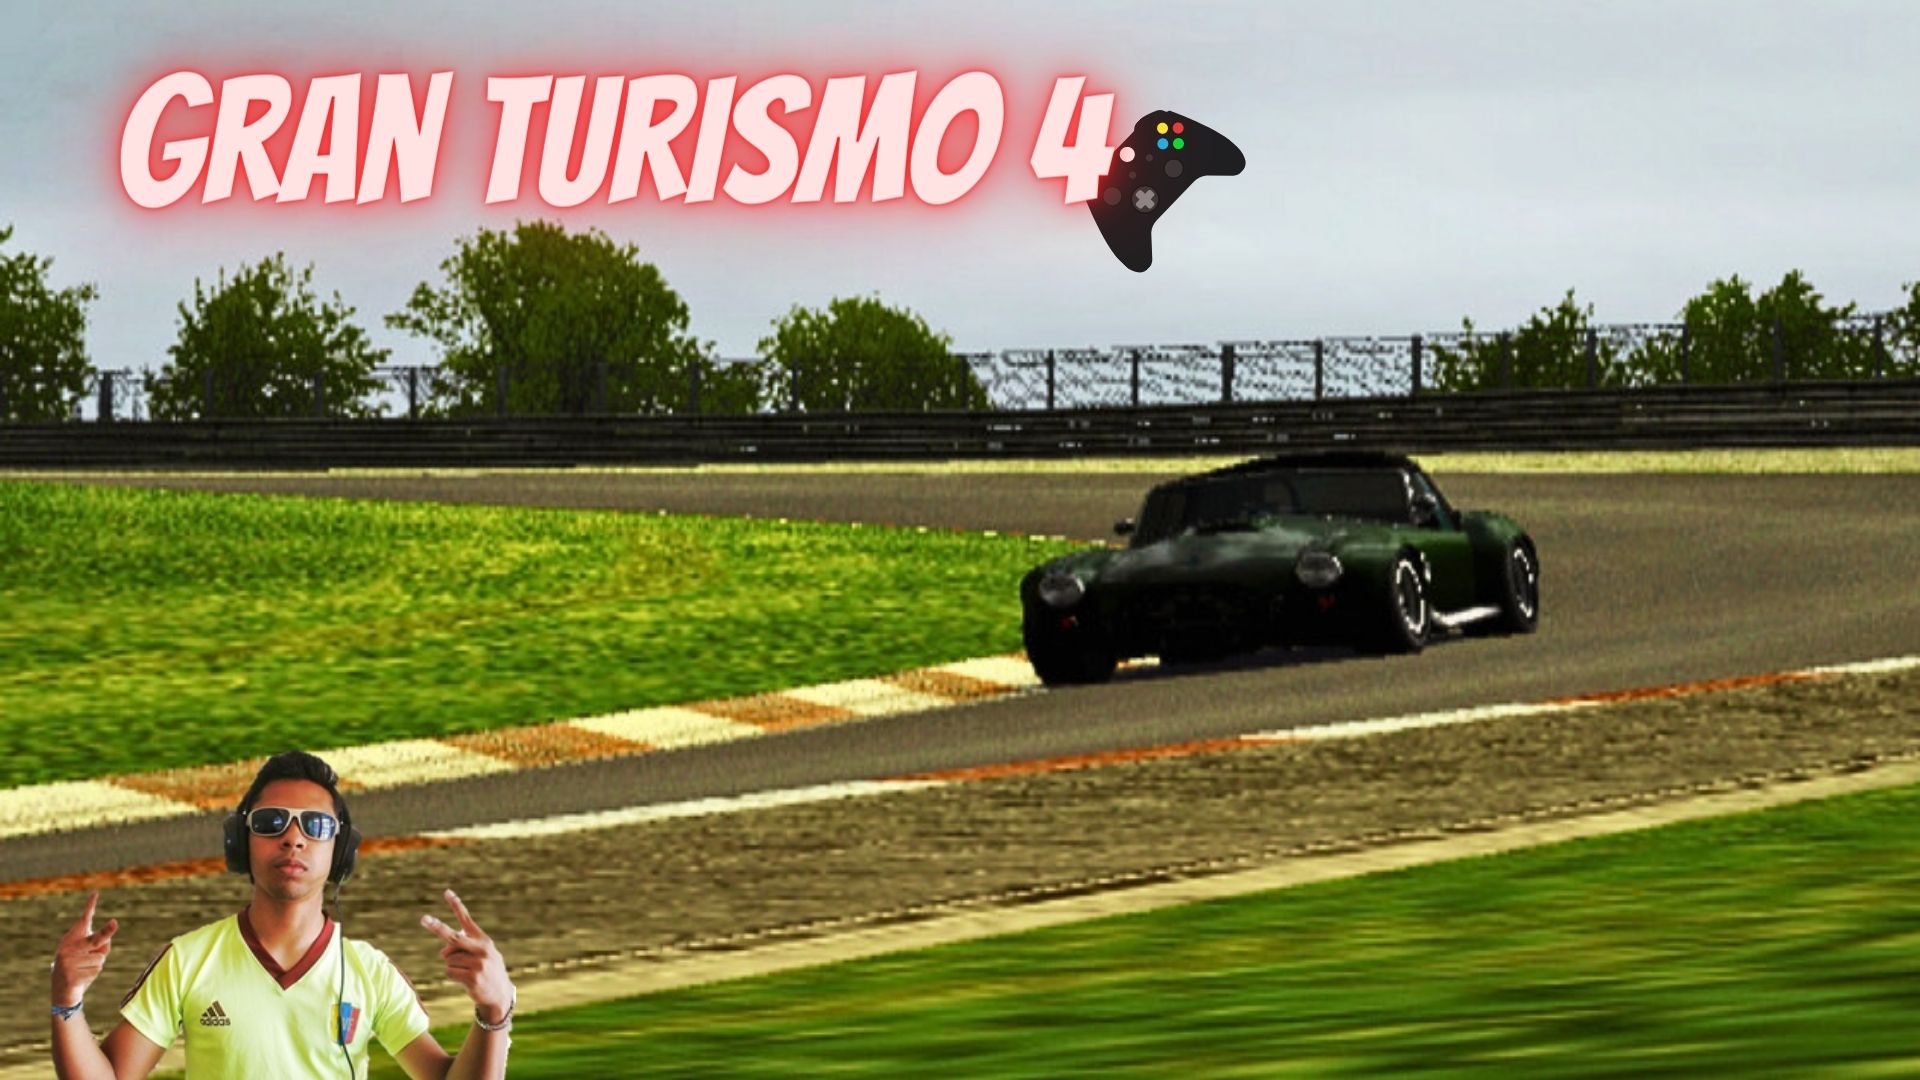 Gran Turismo 4.jpg